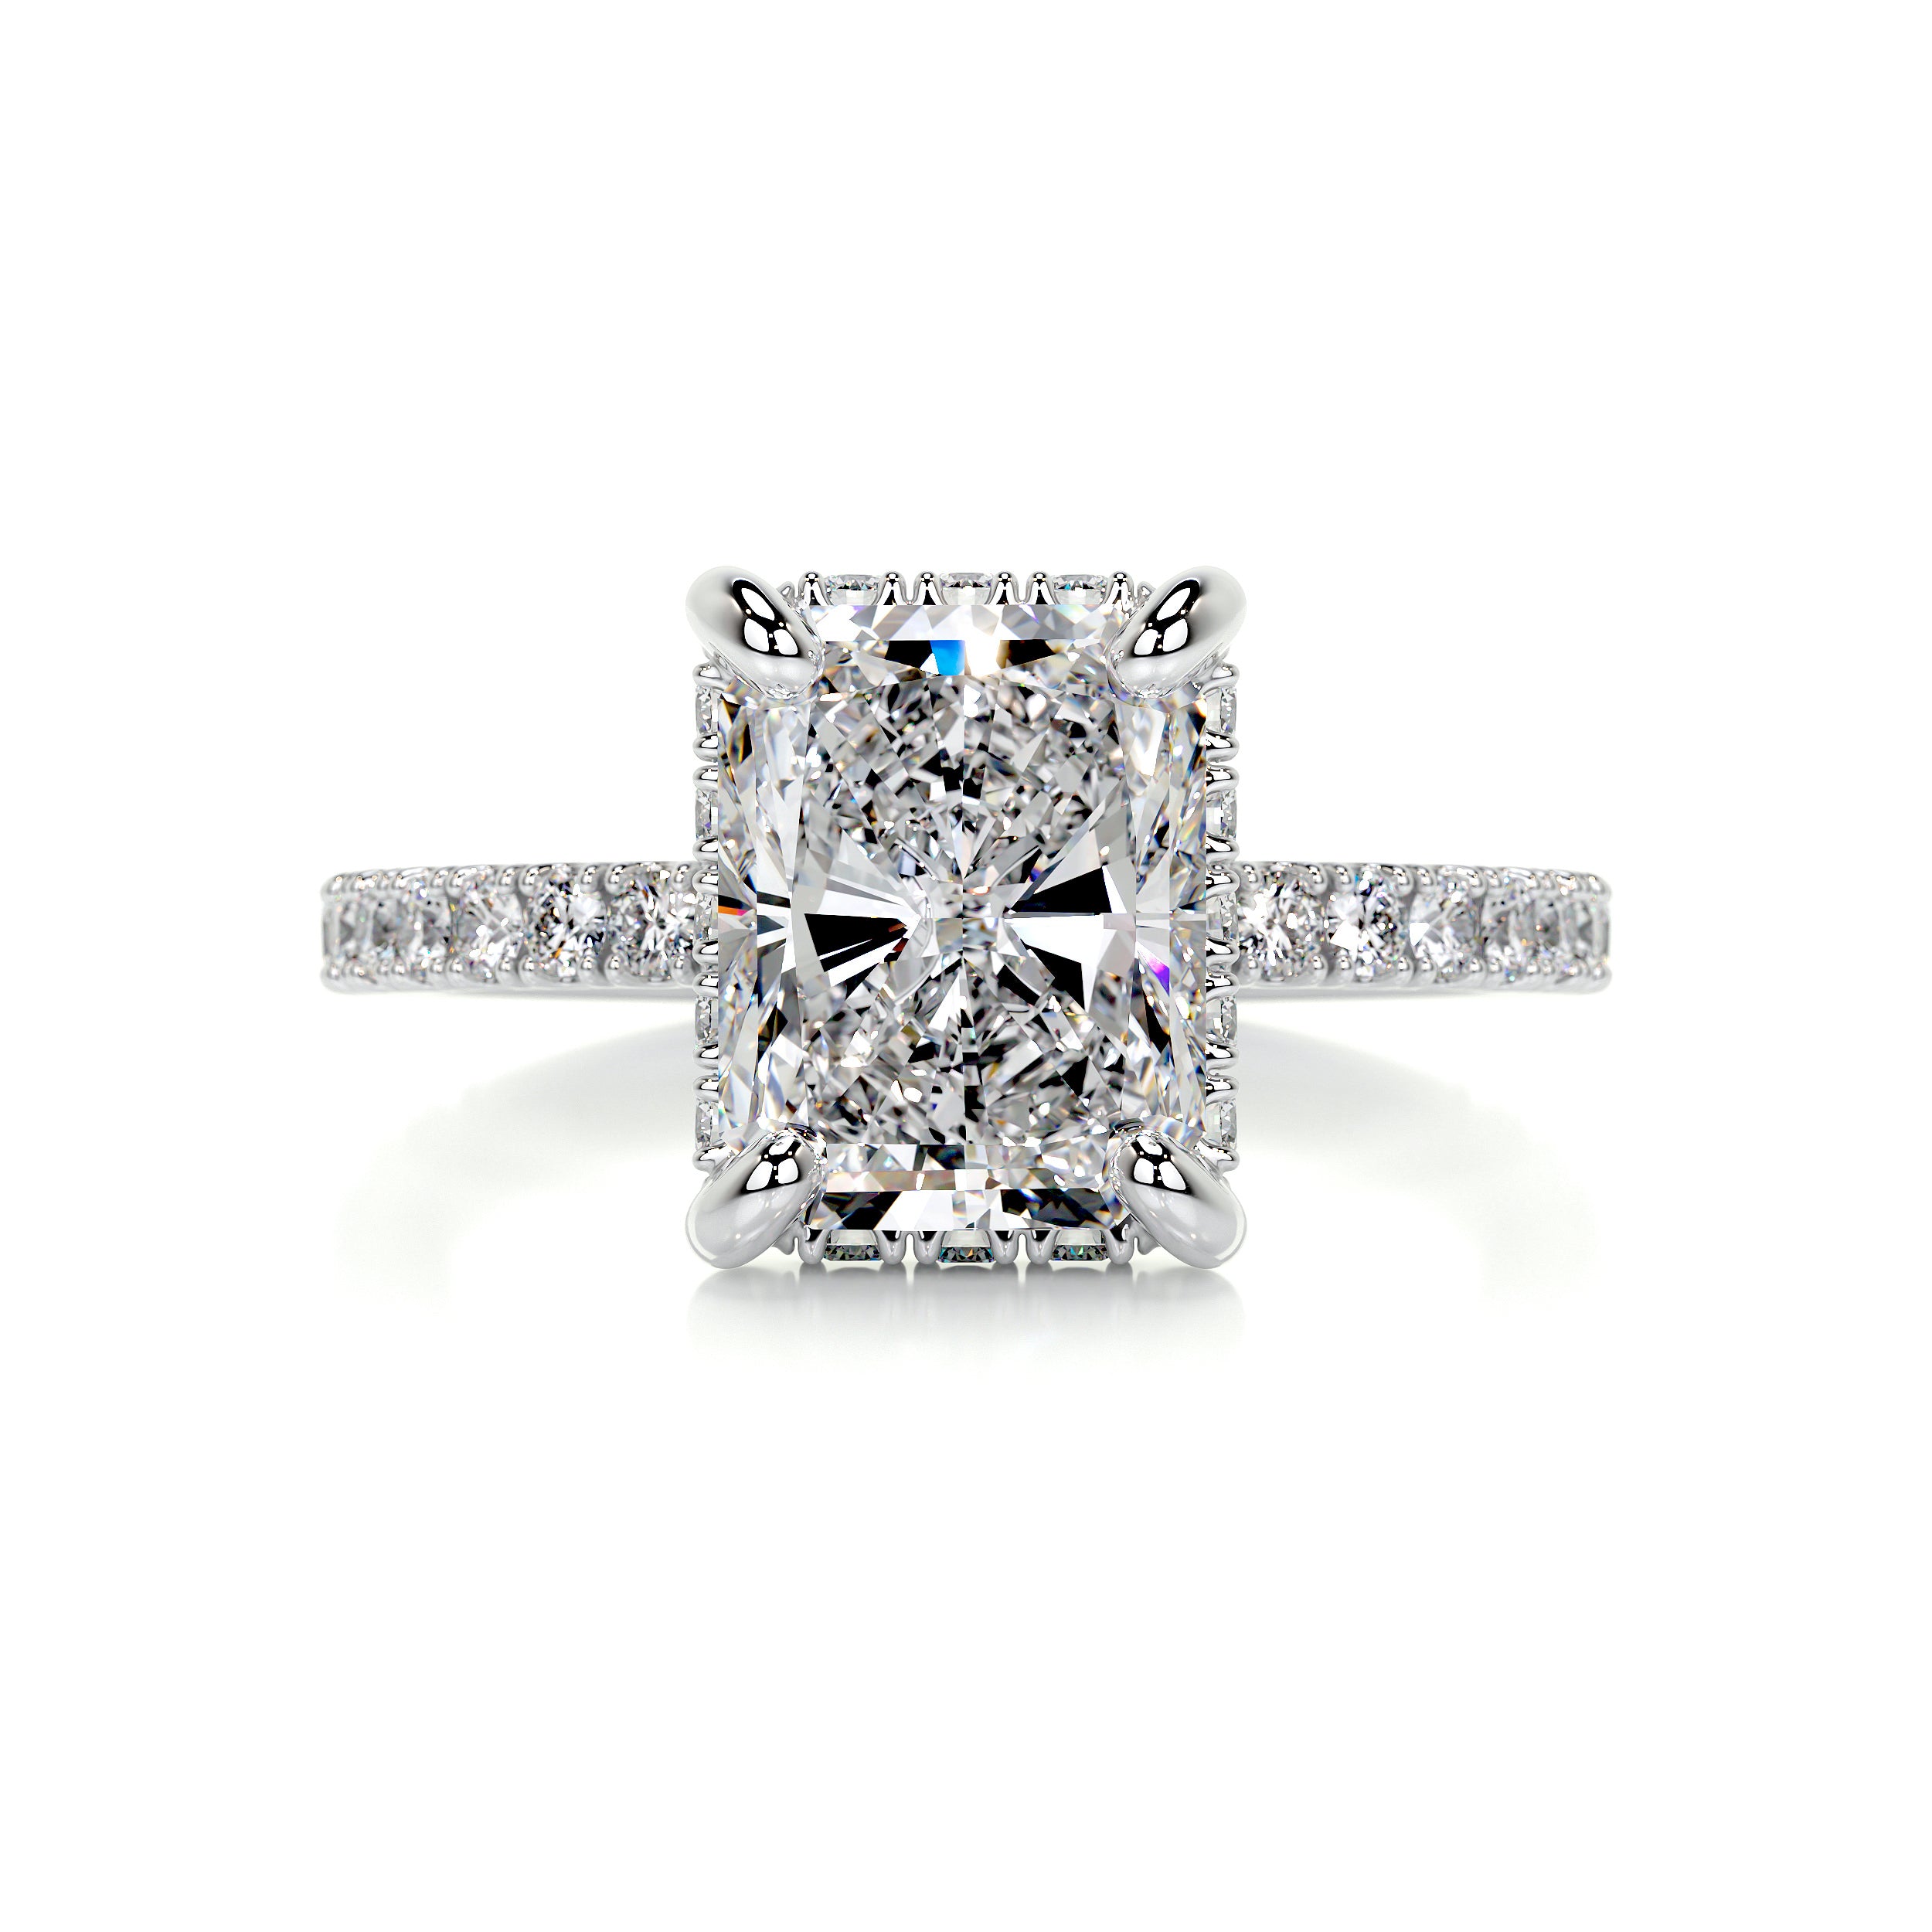 Luna Diamond Engagement Ring, Hidden Halo, 2.5 Carat, 14K White